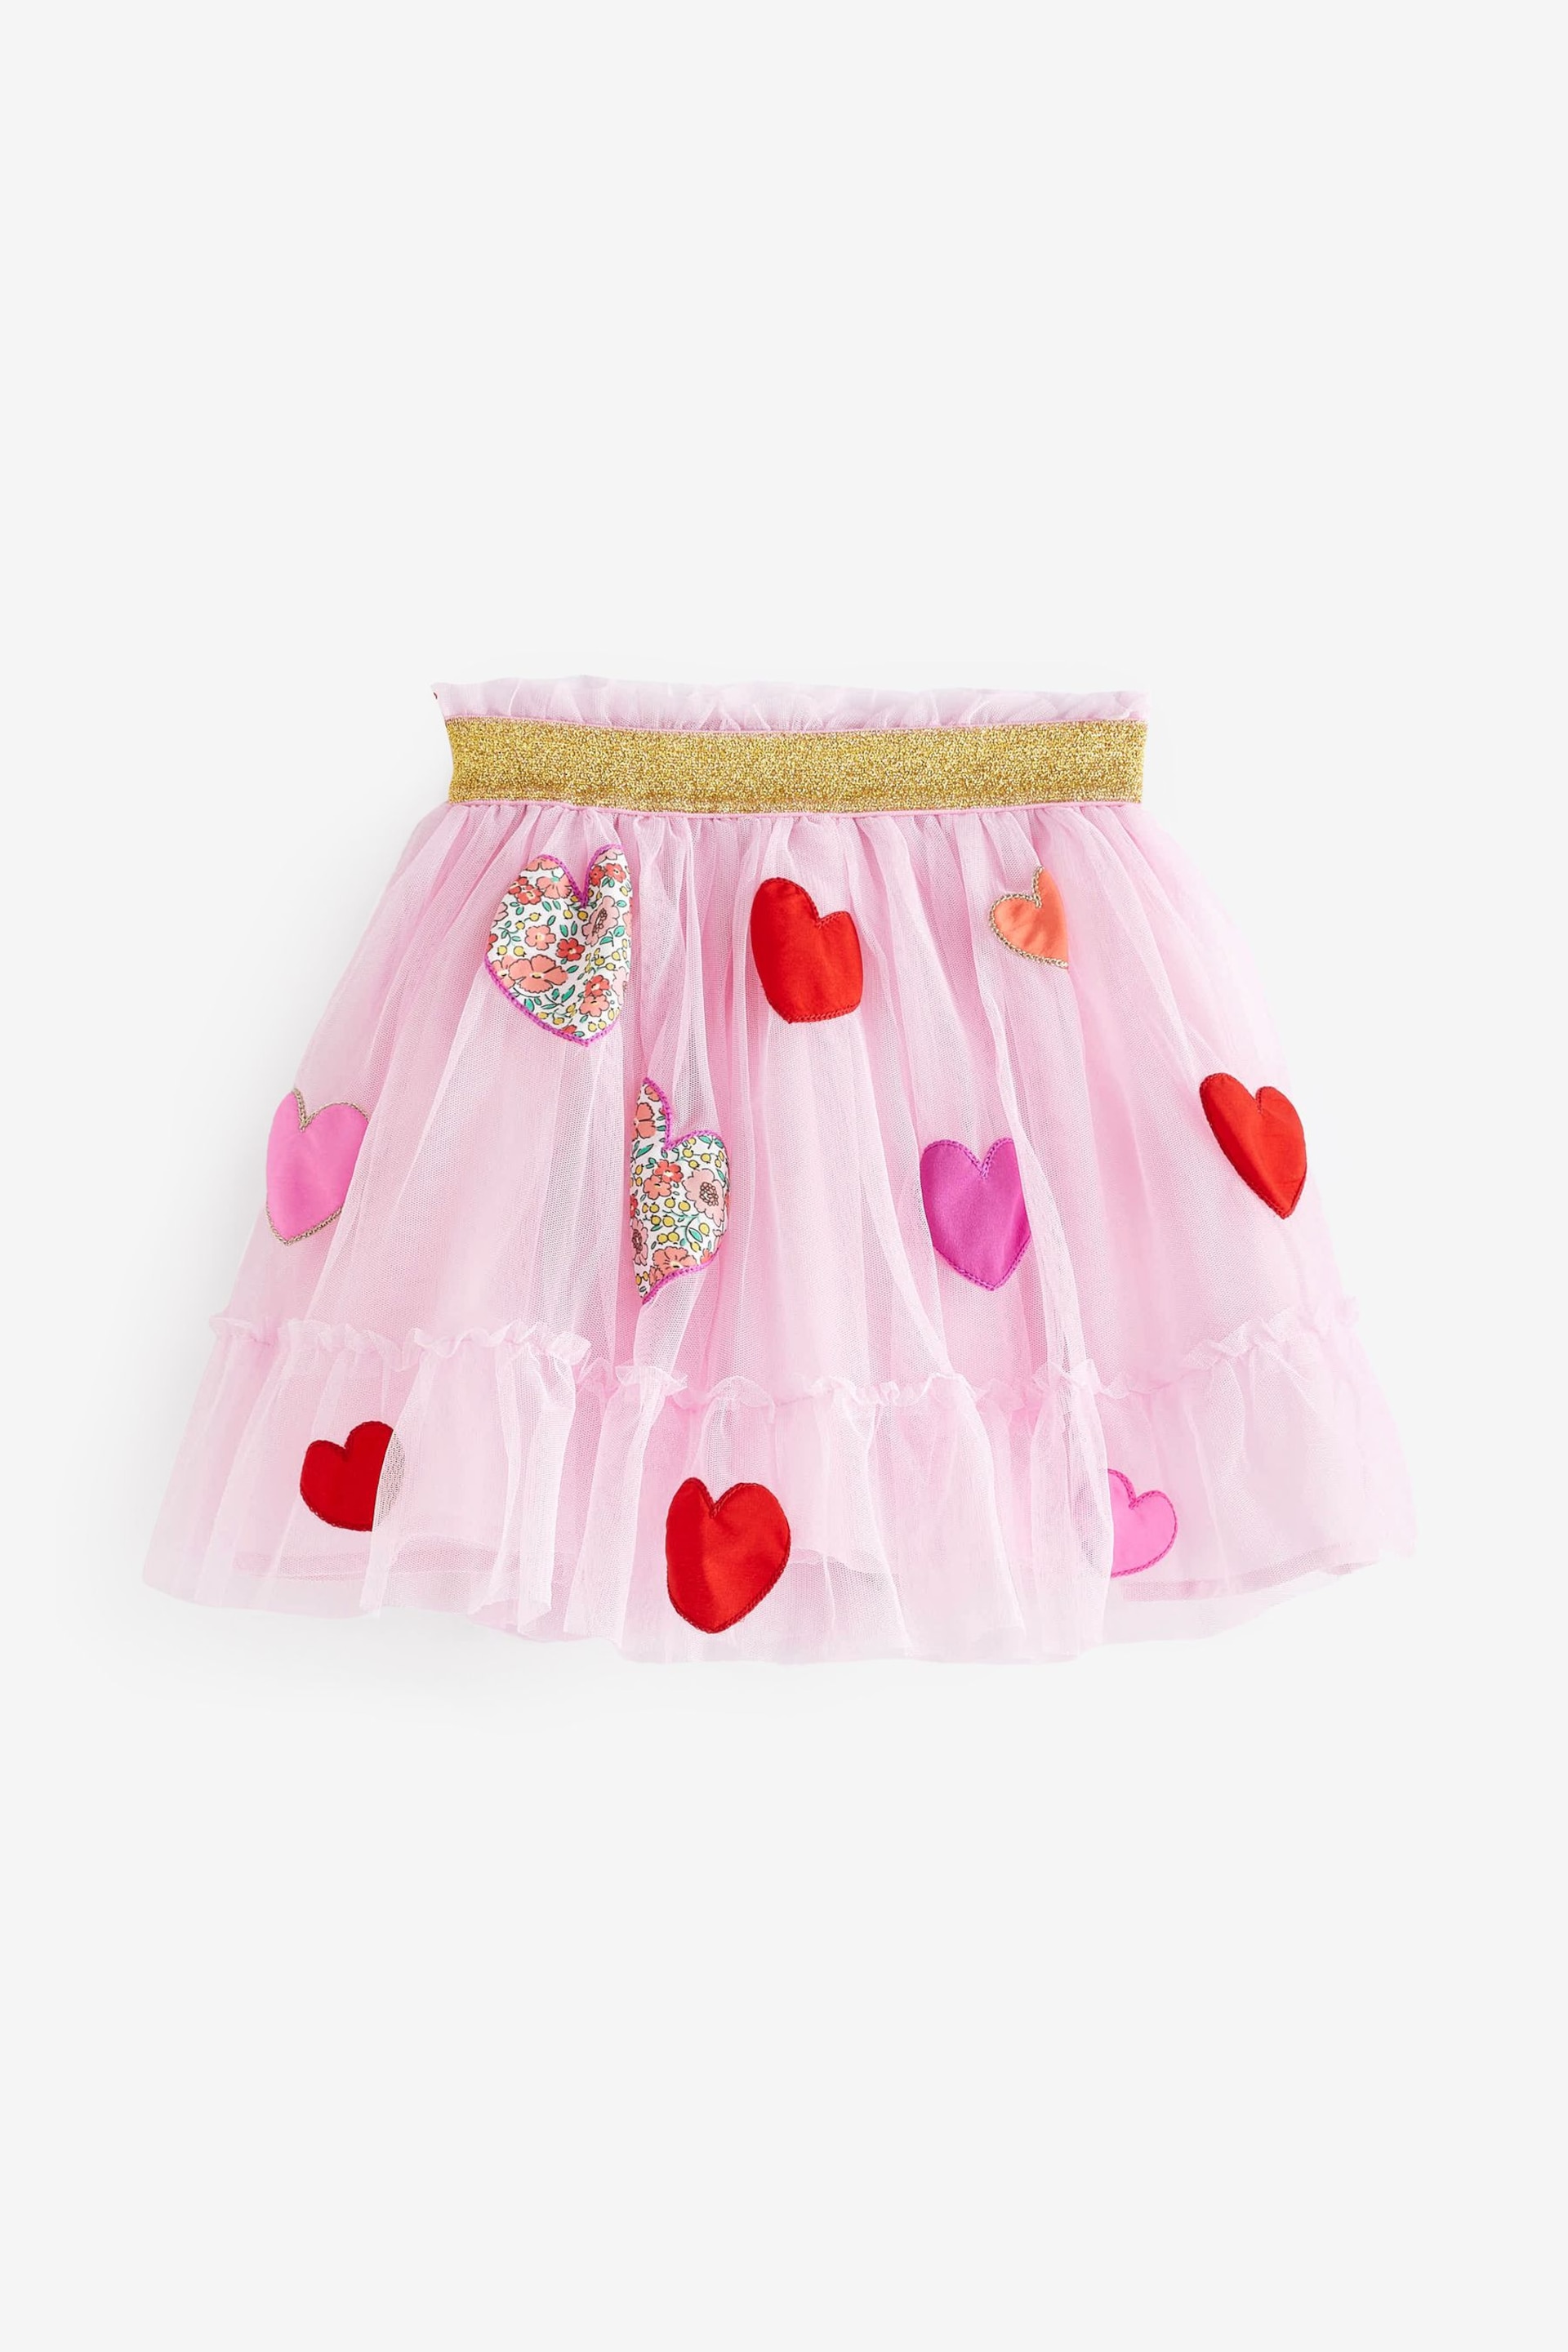 Boden Red Heart Tulle Appliqué Skirt - Image 1 of 4